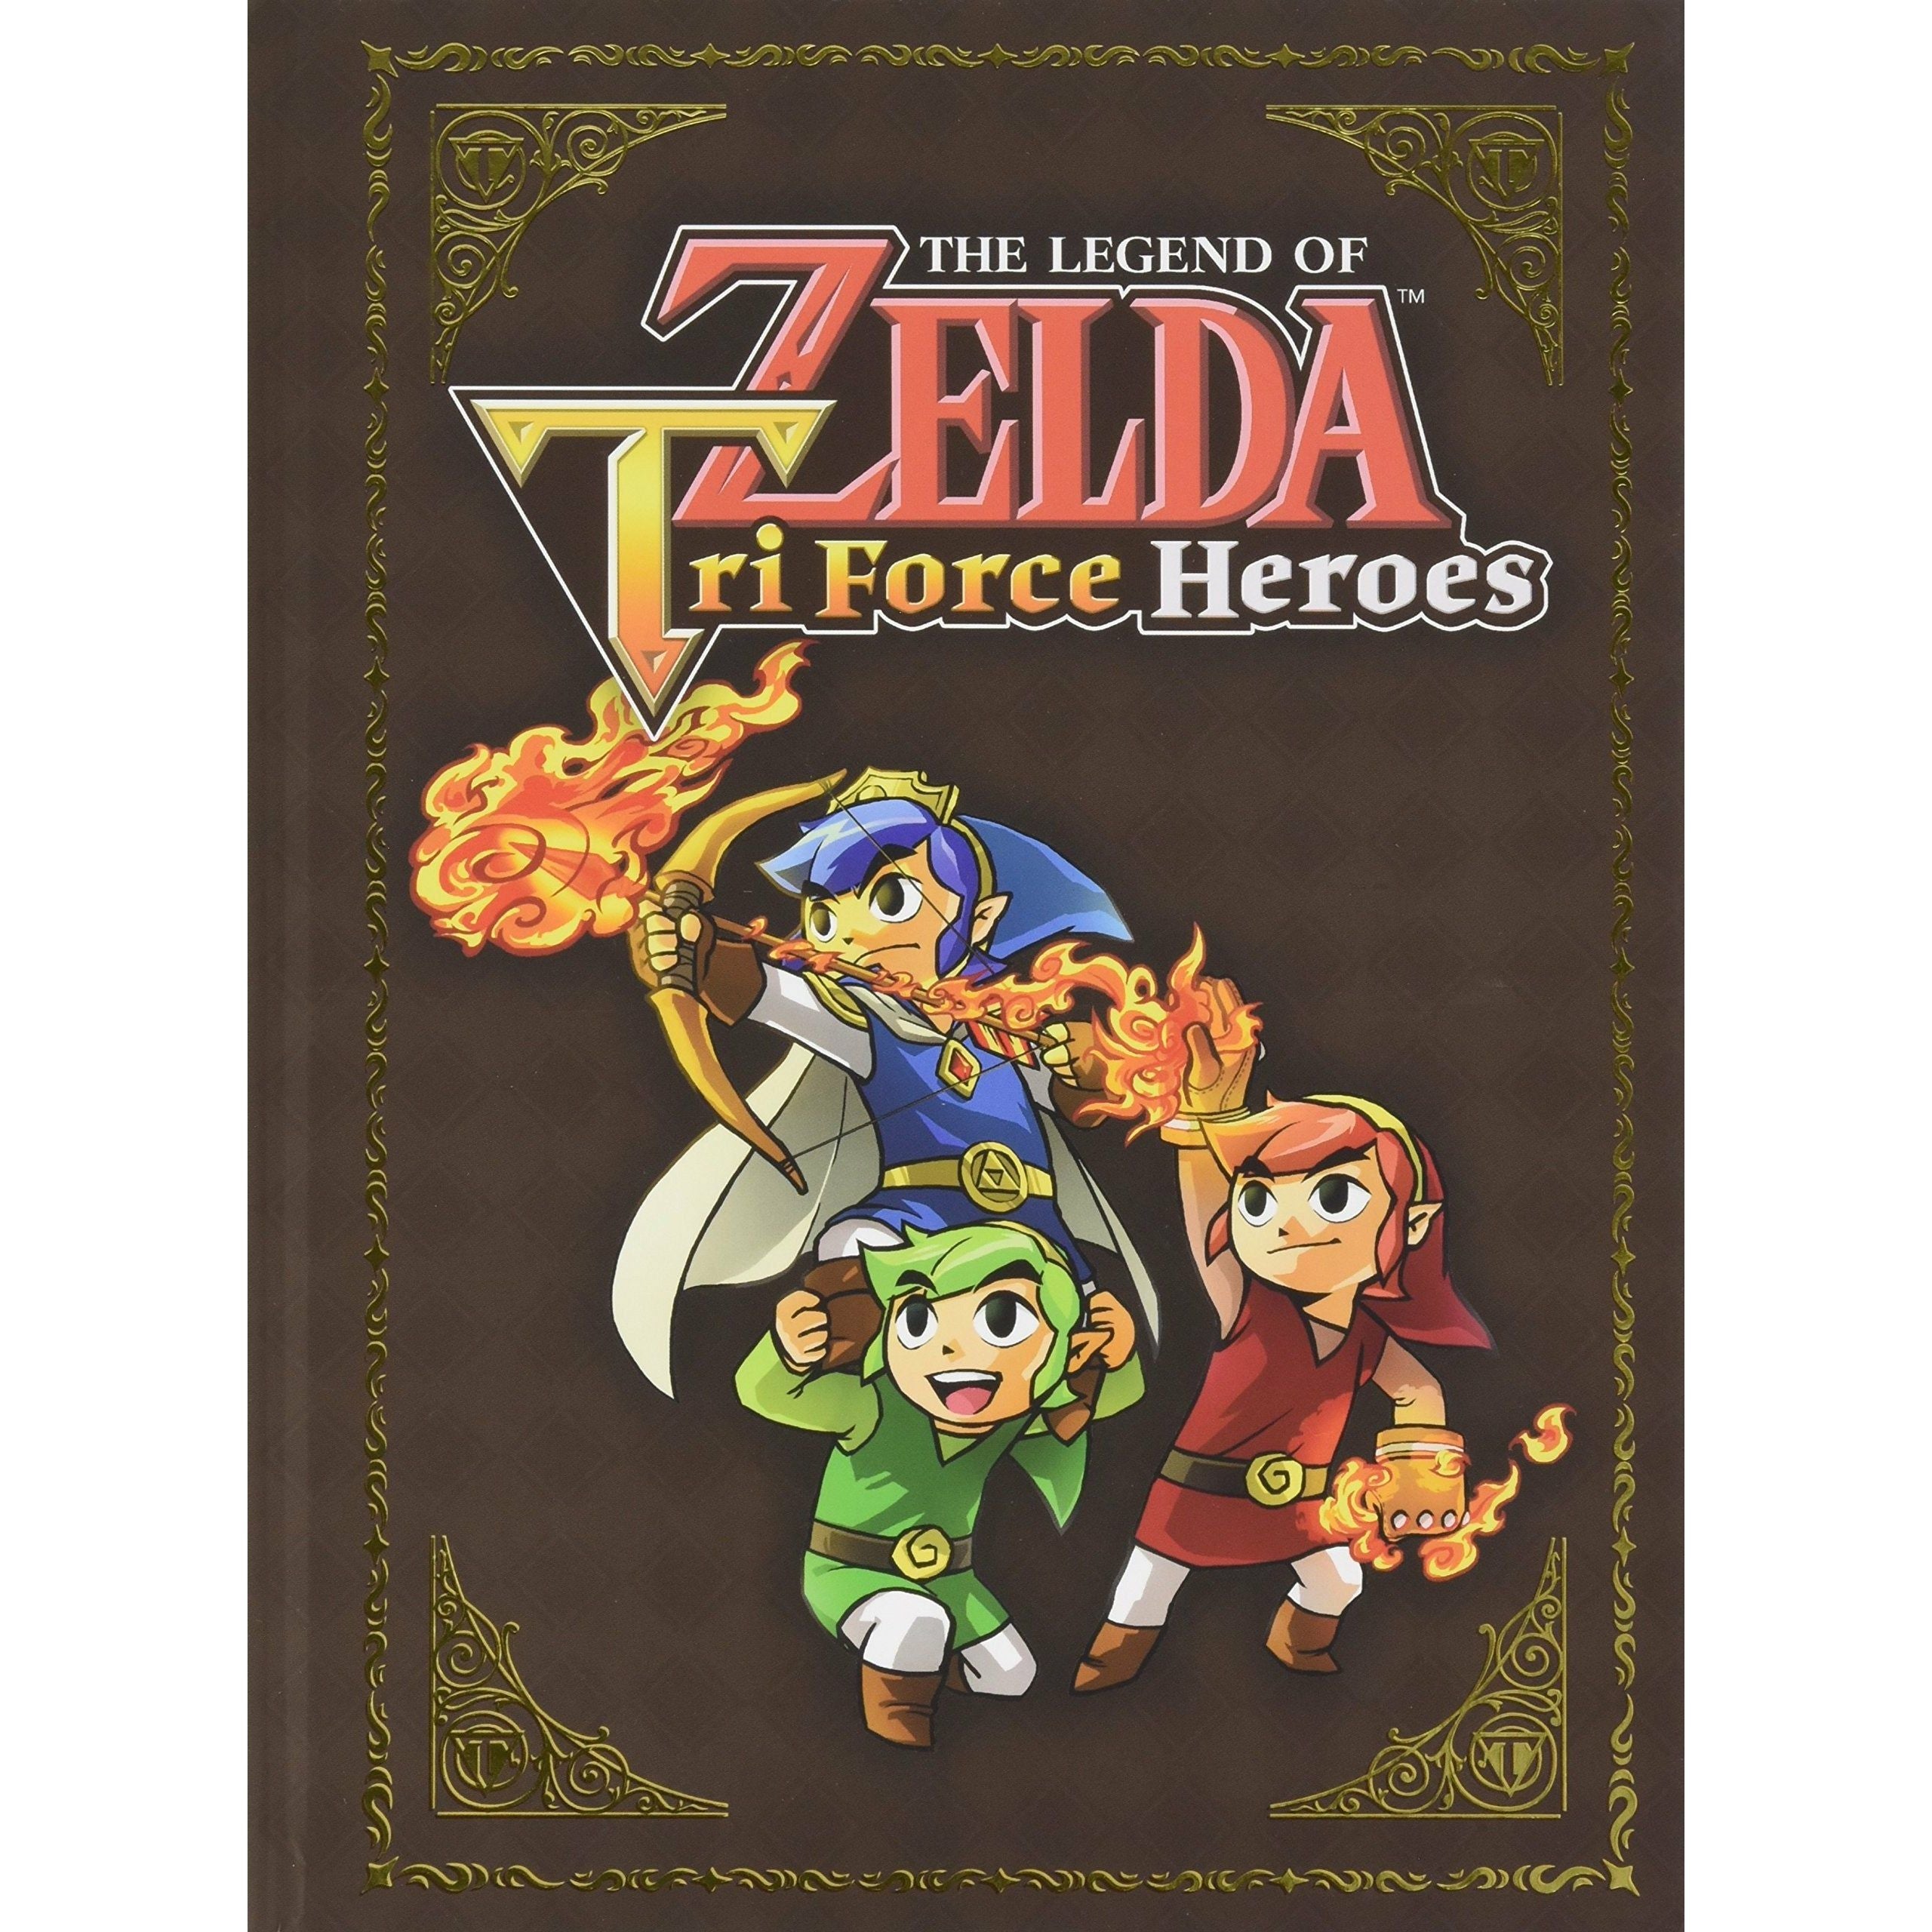 STRAT - Guide du collectionneur The Legend of Zelda Tri Force Heroes